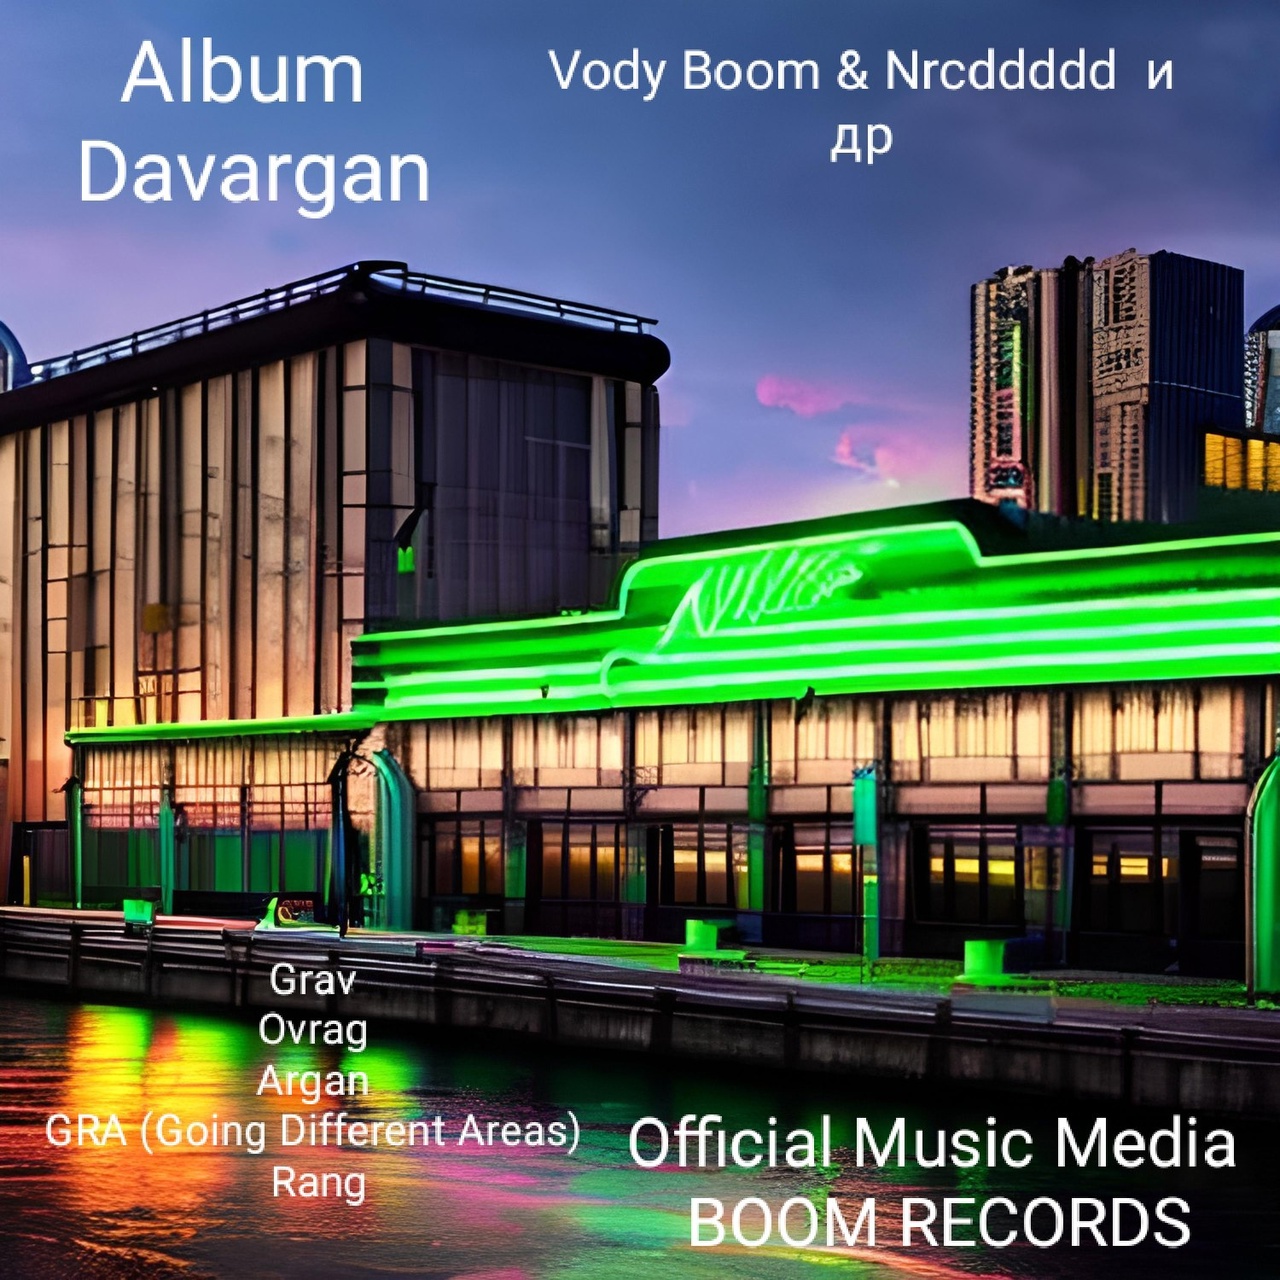 Vody Boom & DJ Nrcddddd GRA (Going Different Areas) cover artwork